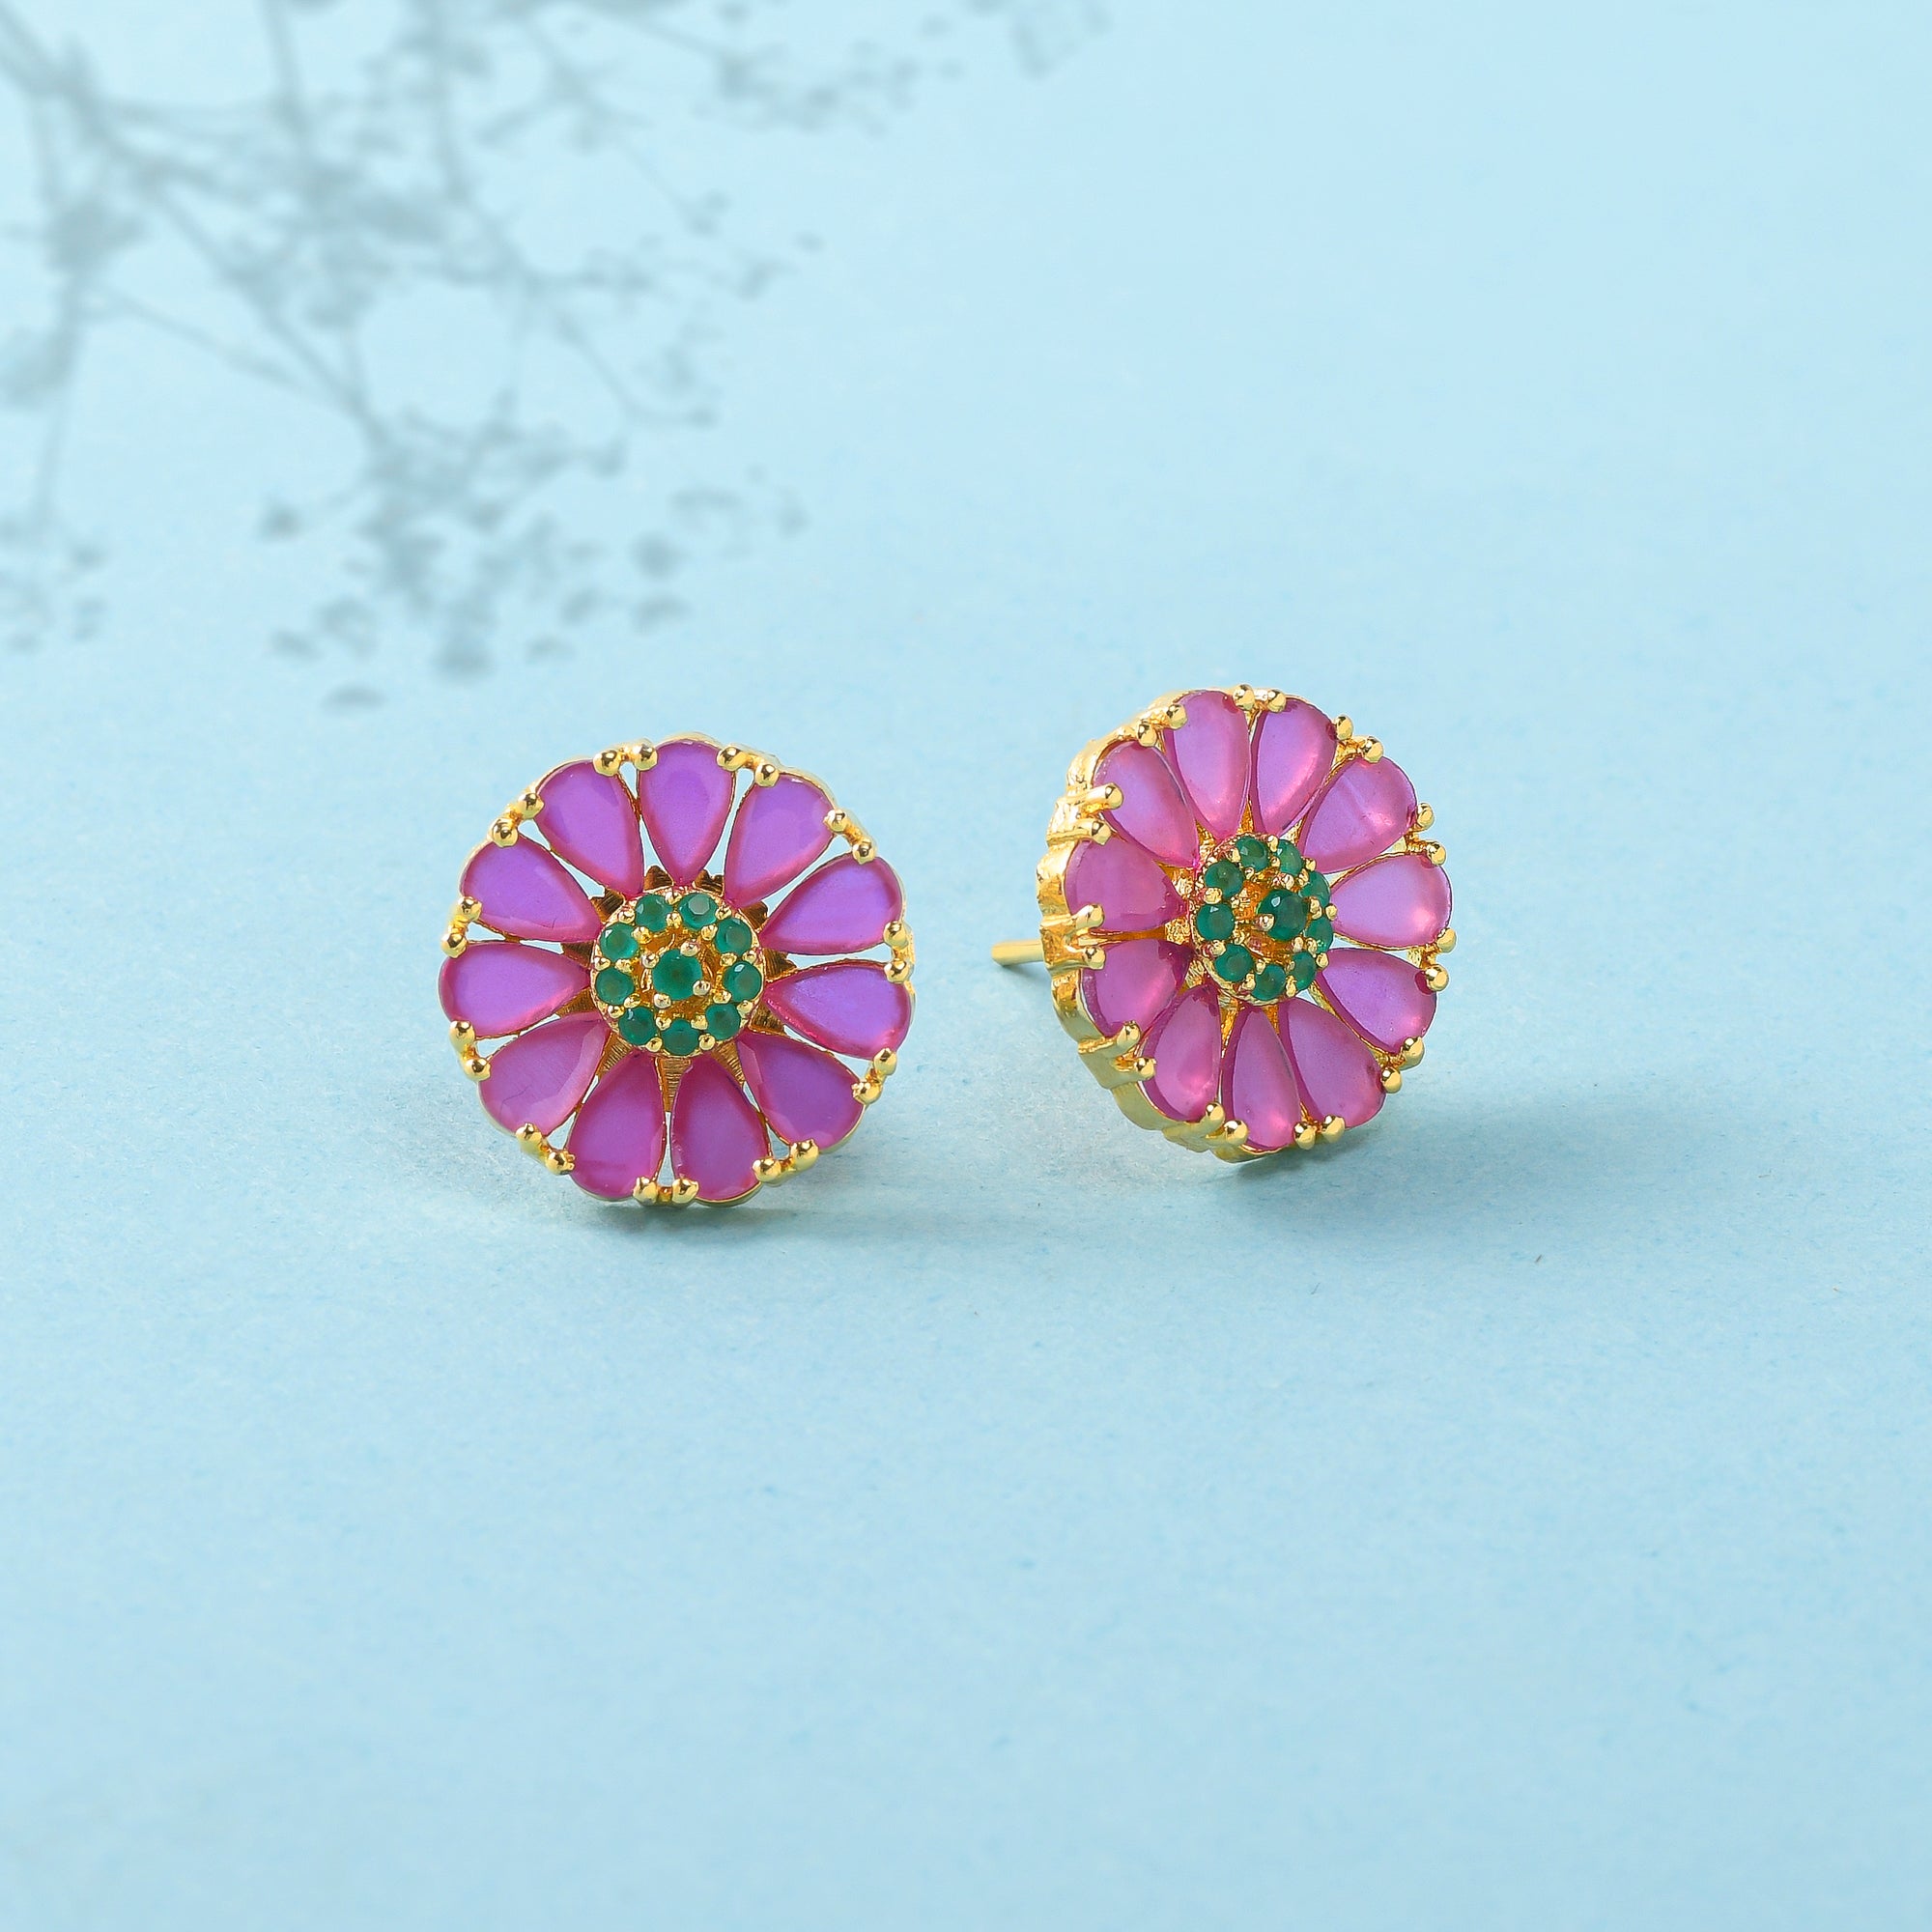 Women's Green And Pink Cz Gems Stud Earrings - Voylla